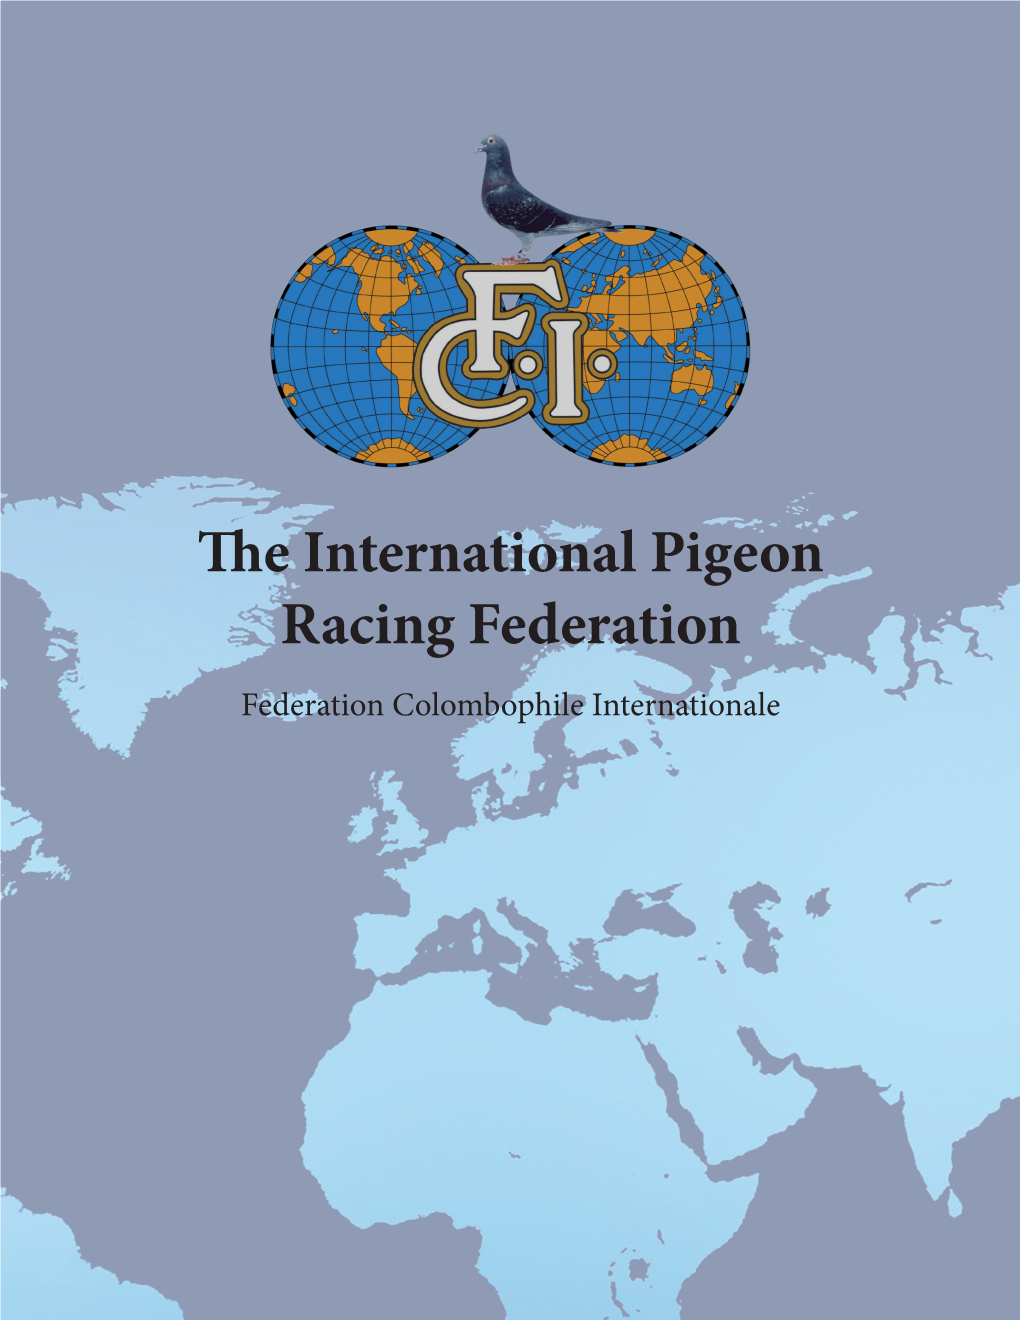 The International Pigeon Racing Federation Federation Colombophile Internationale